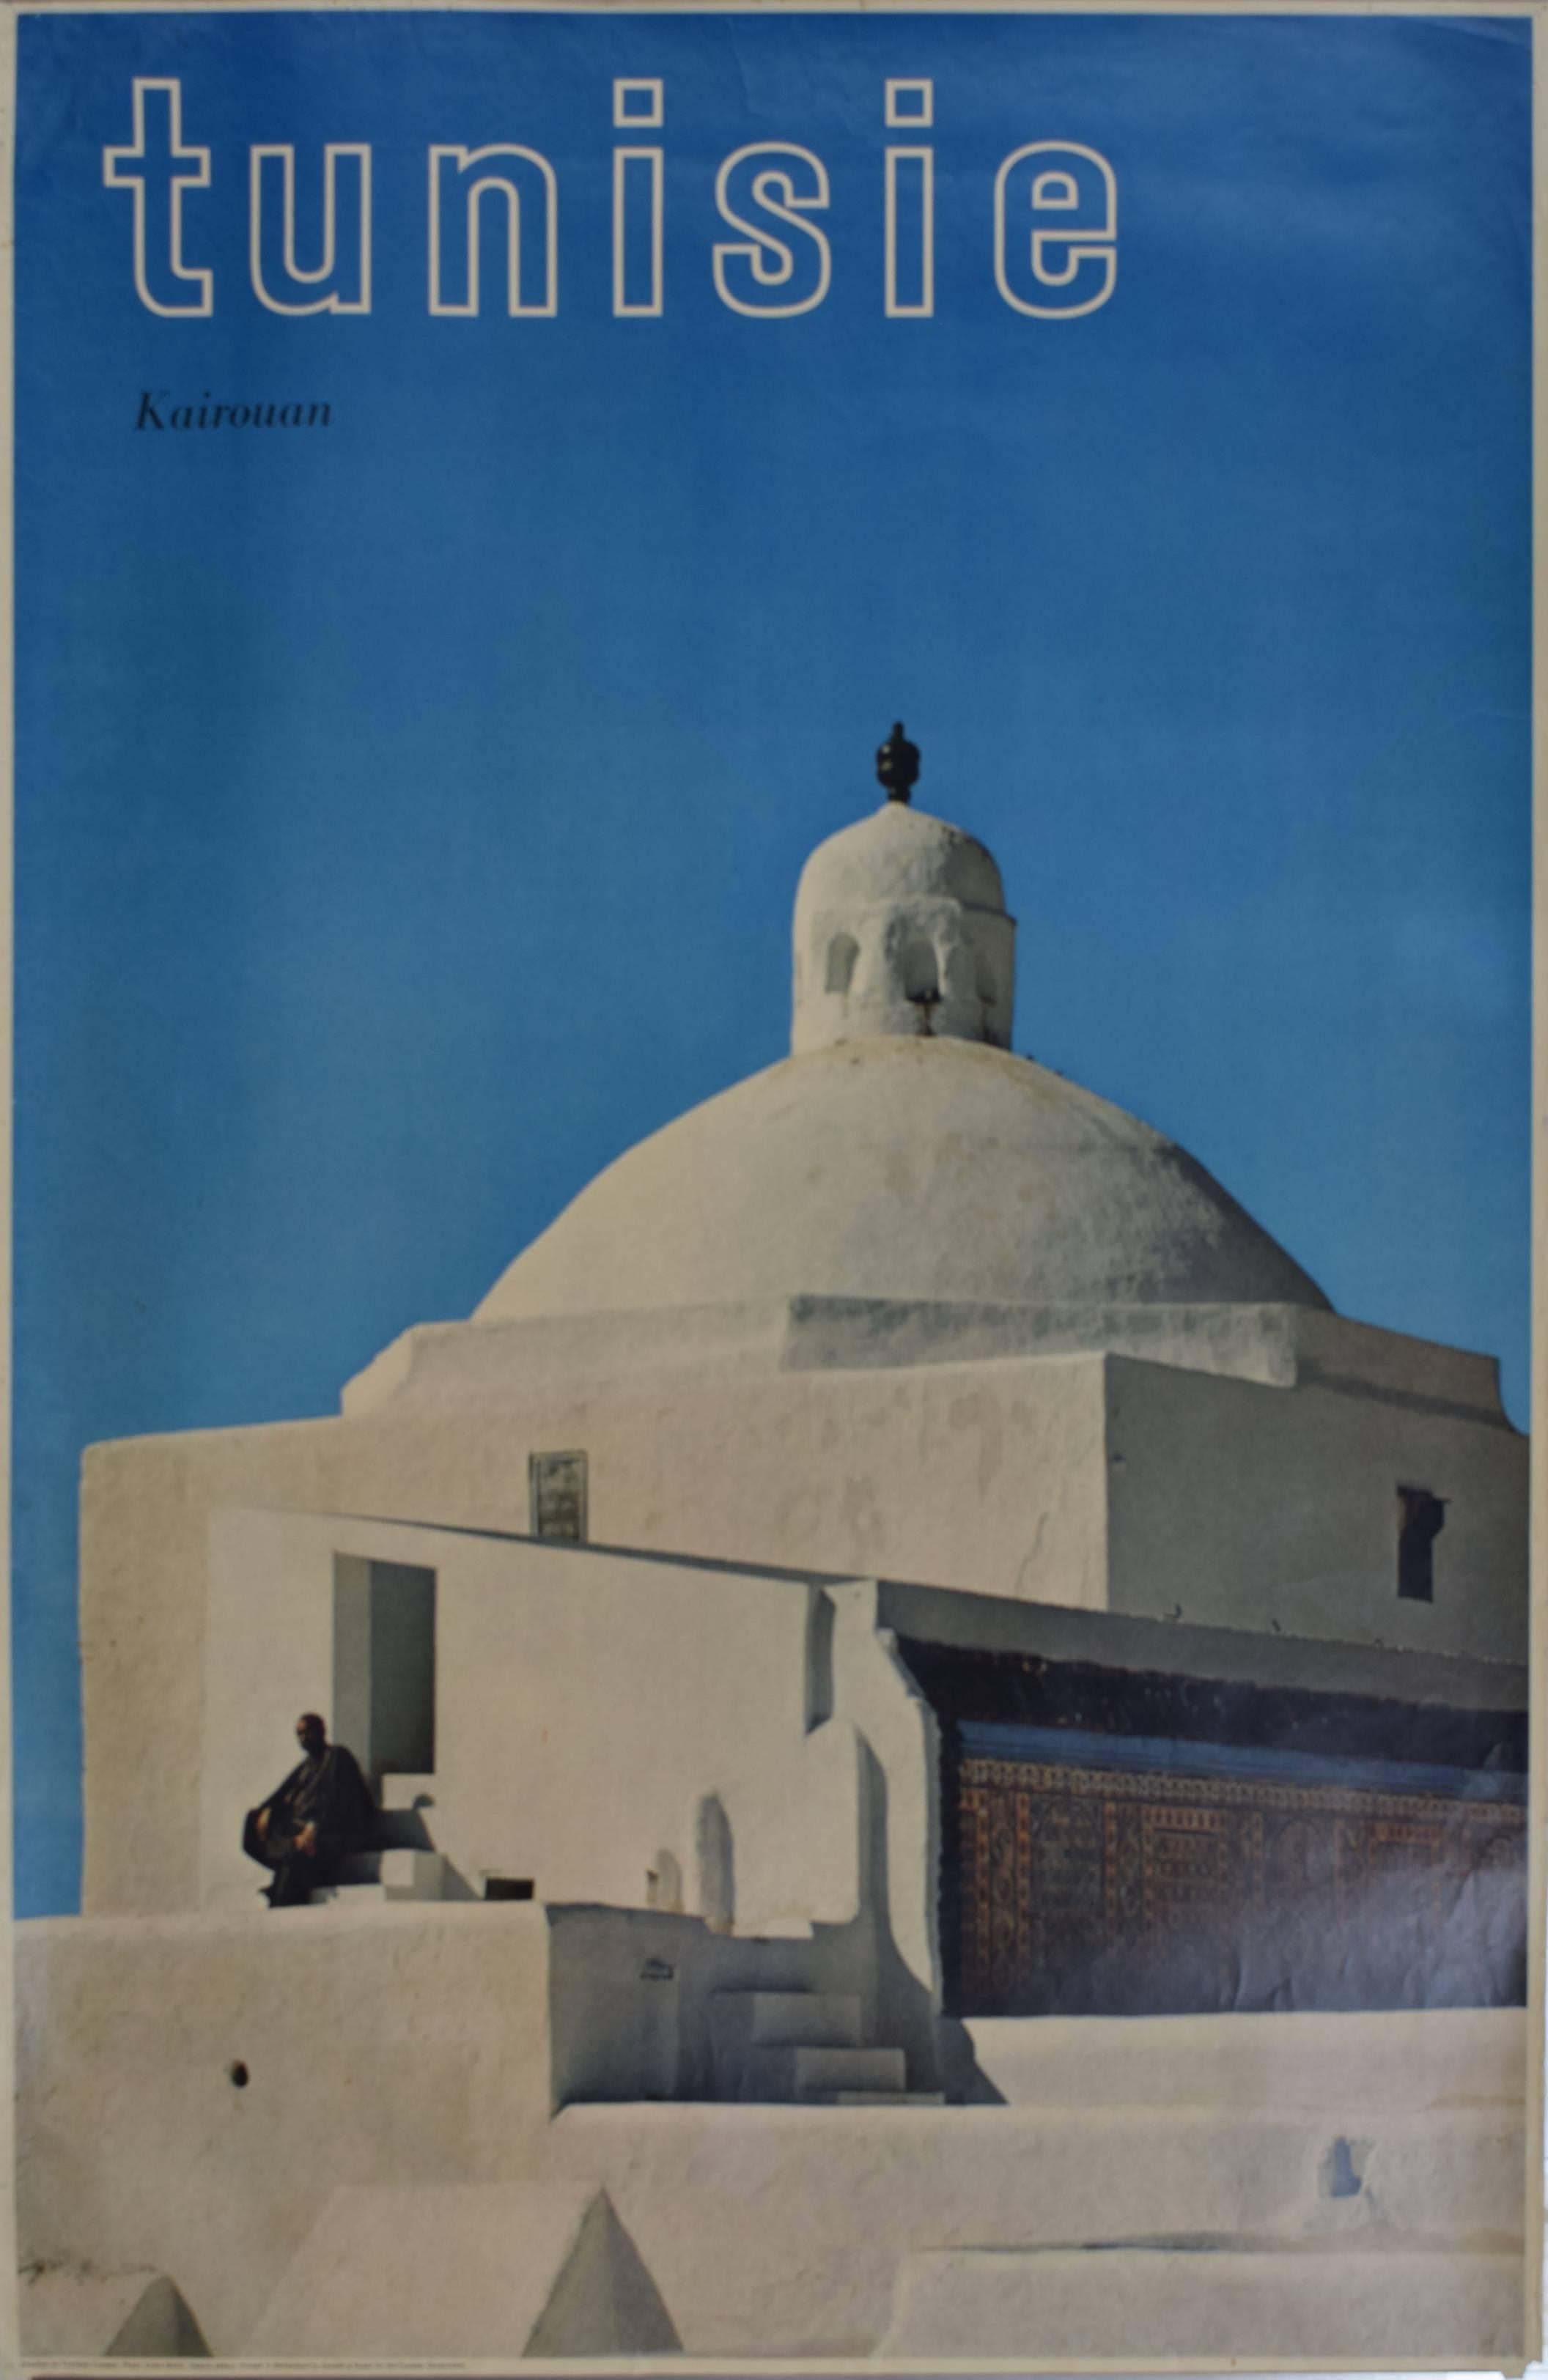 Unknown Landscape Photograph - Tunisia original vintage poster